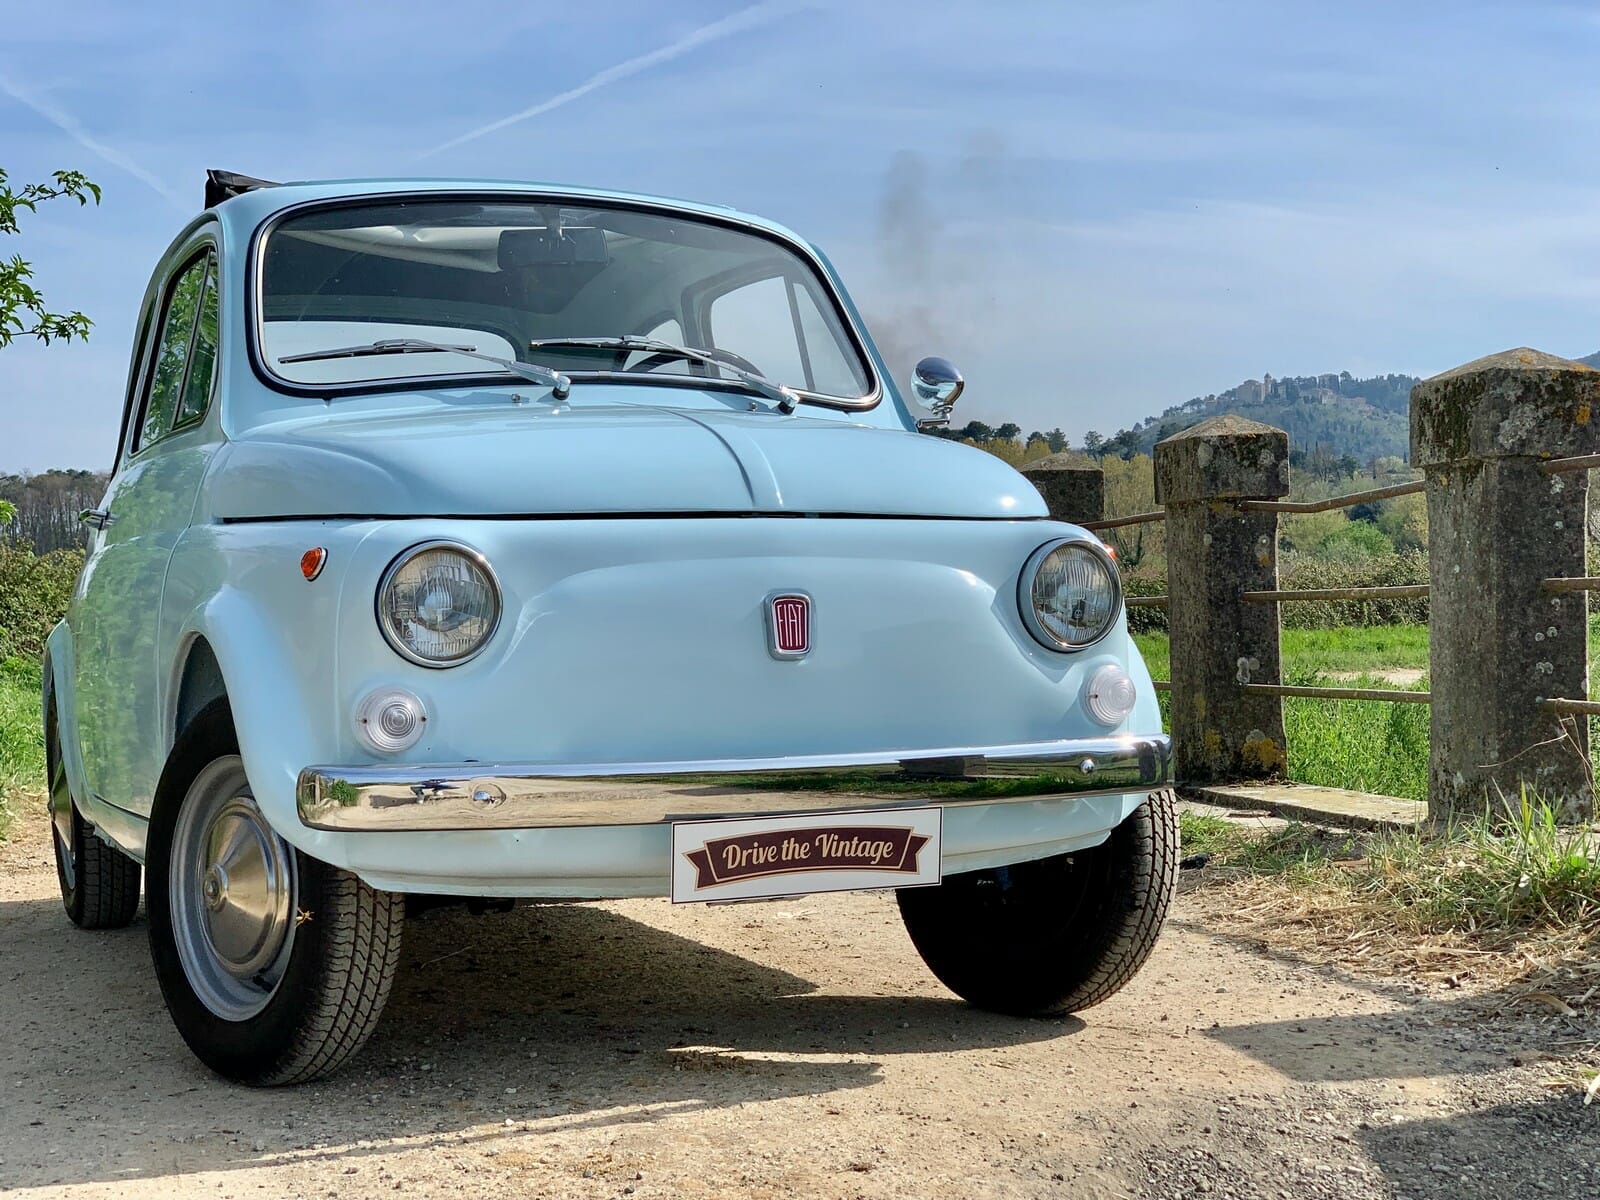 sector Drank natuurlijk Fiat 500 blue - Drive the vintage